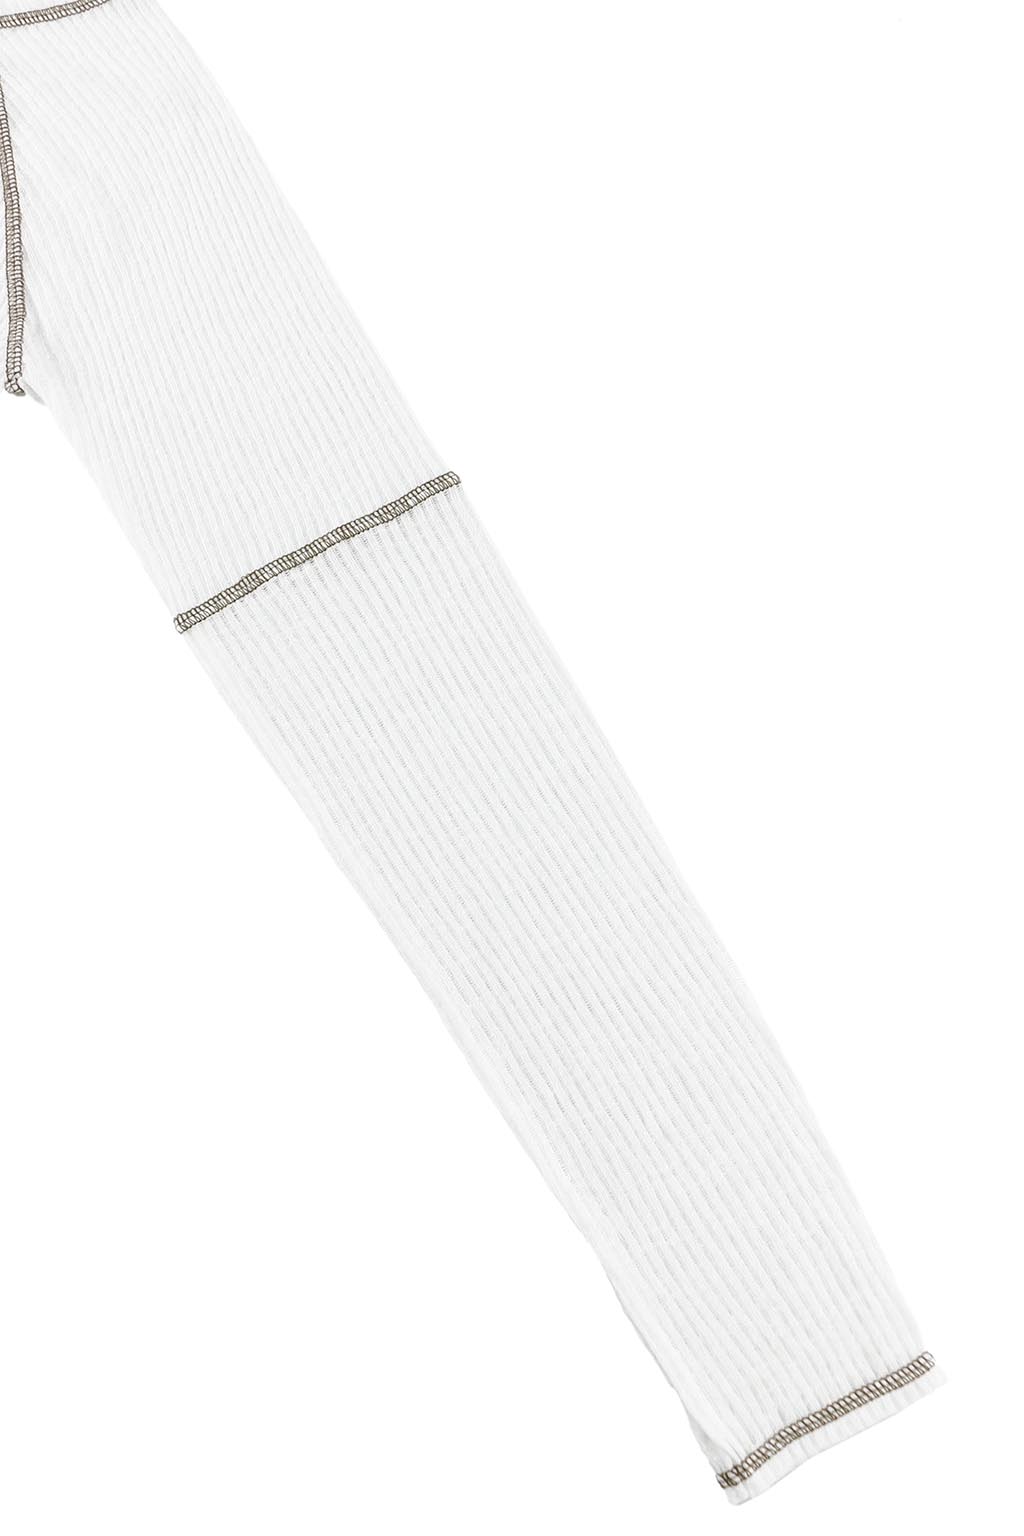 sheer-rib-long-sleeve-top-white-11